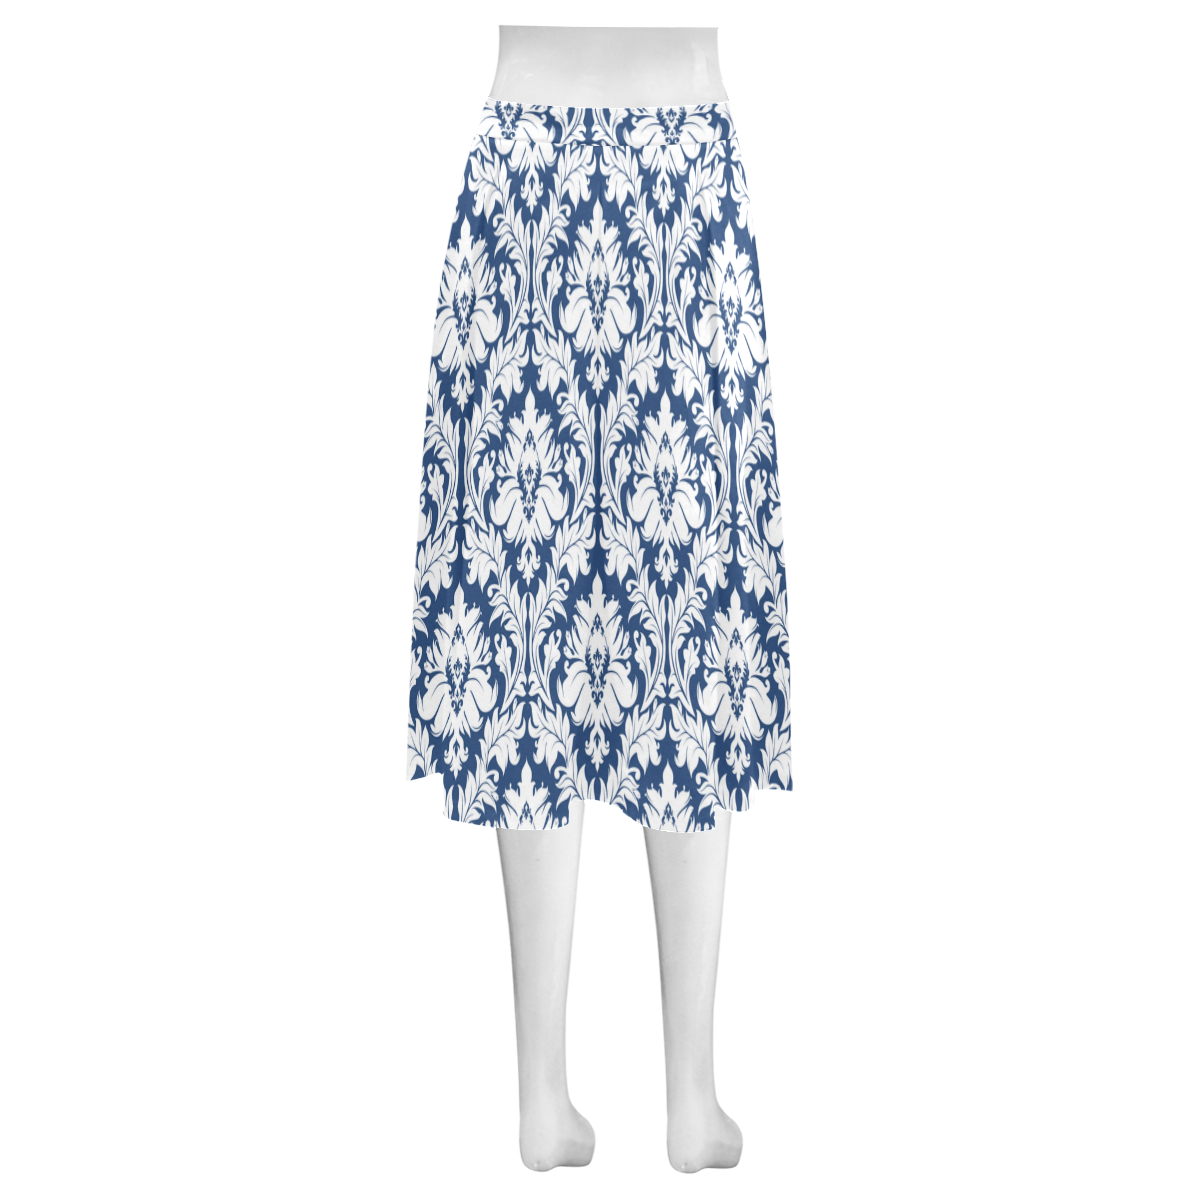 damask pattern navy blue and white Mnemosyne Women's Crepe Skirt (Model D16)